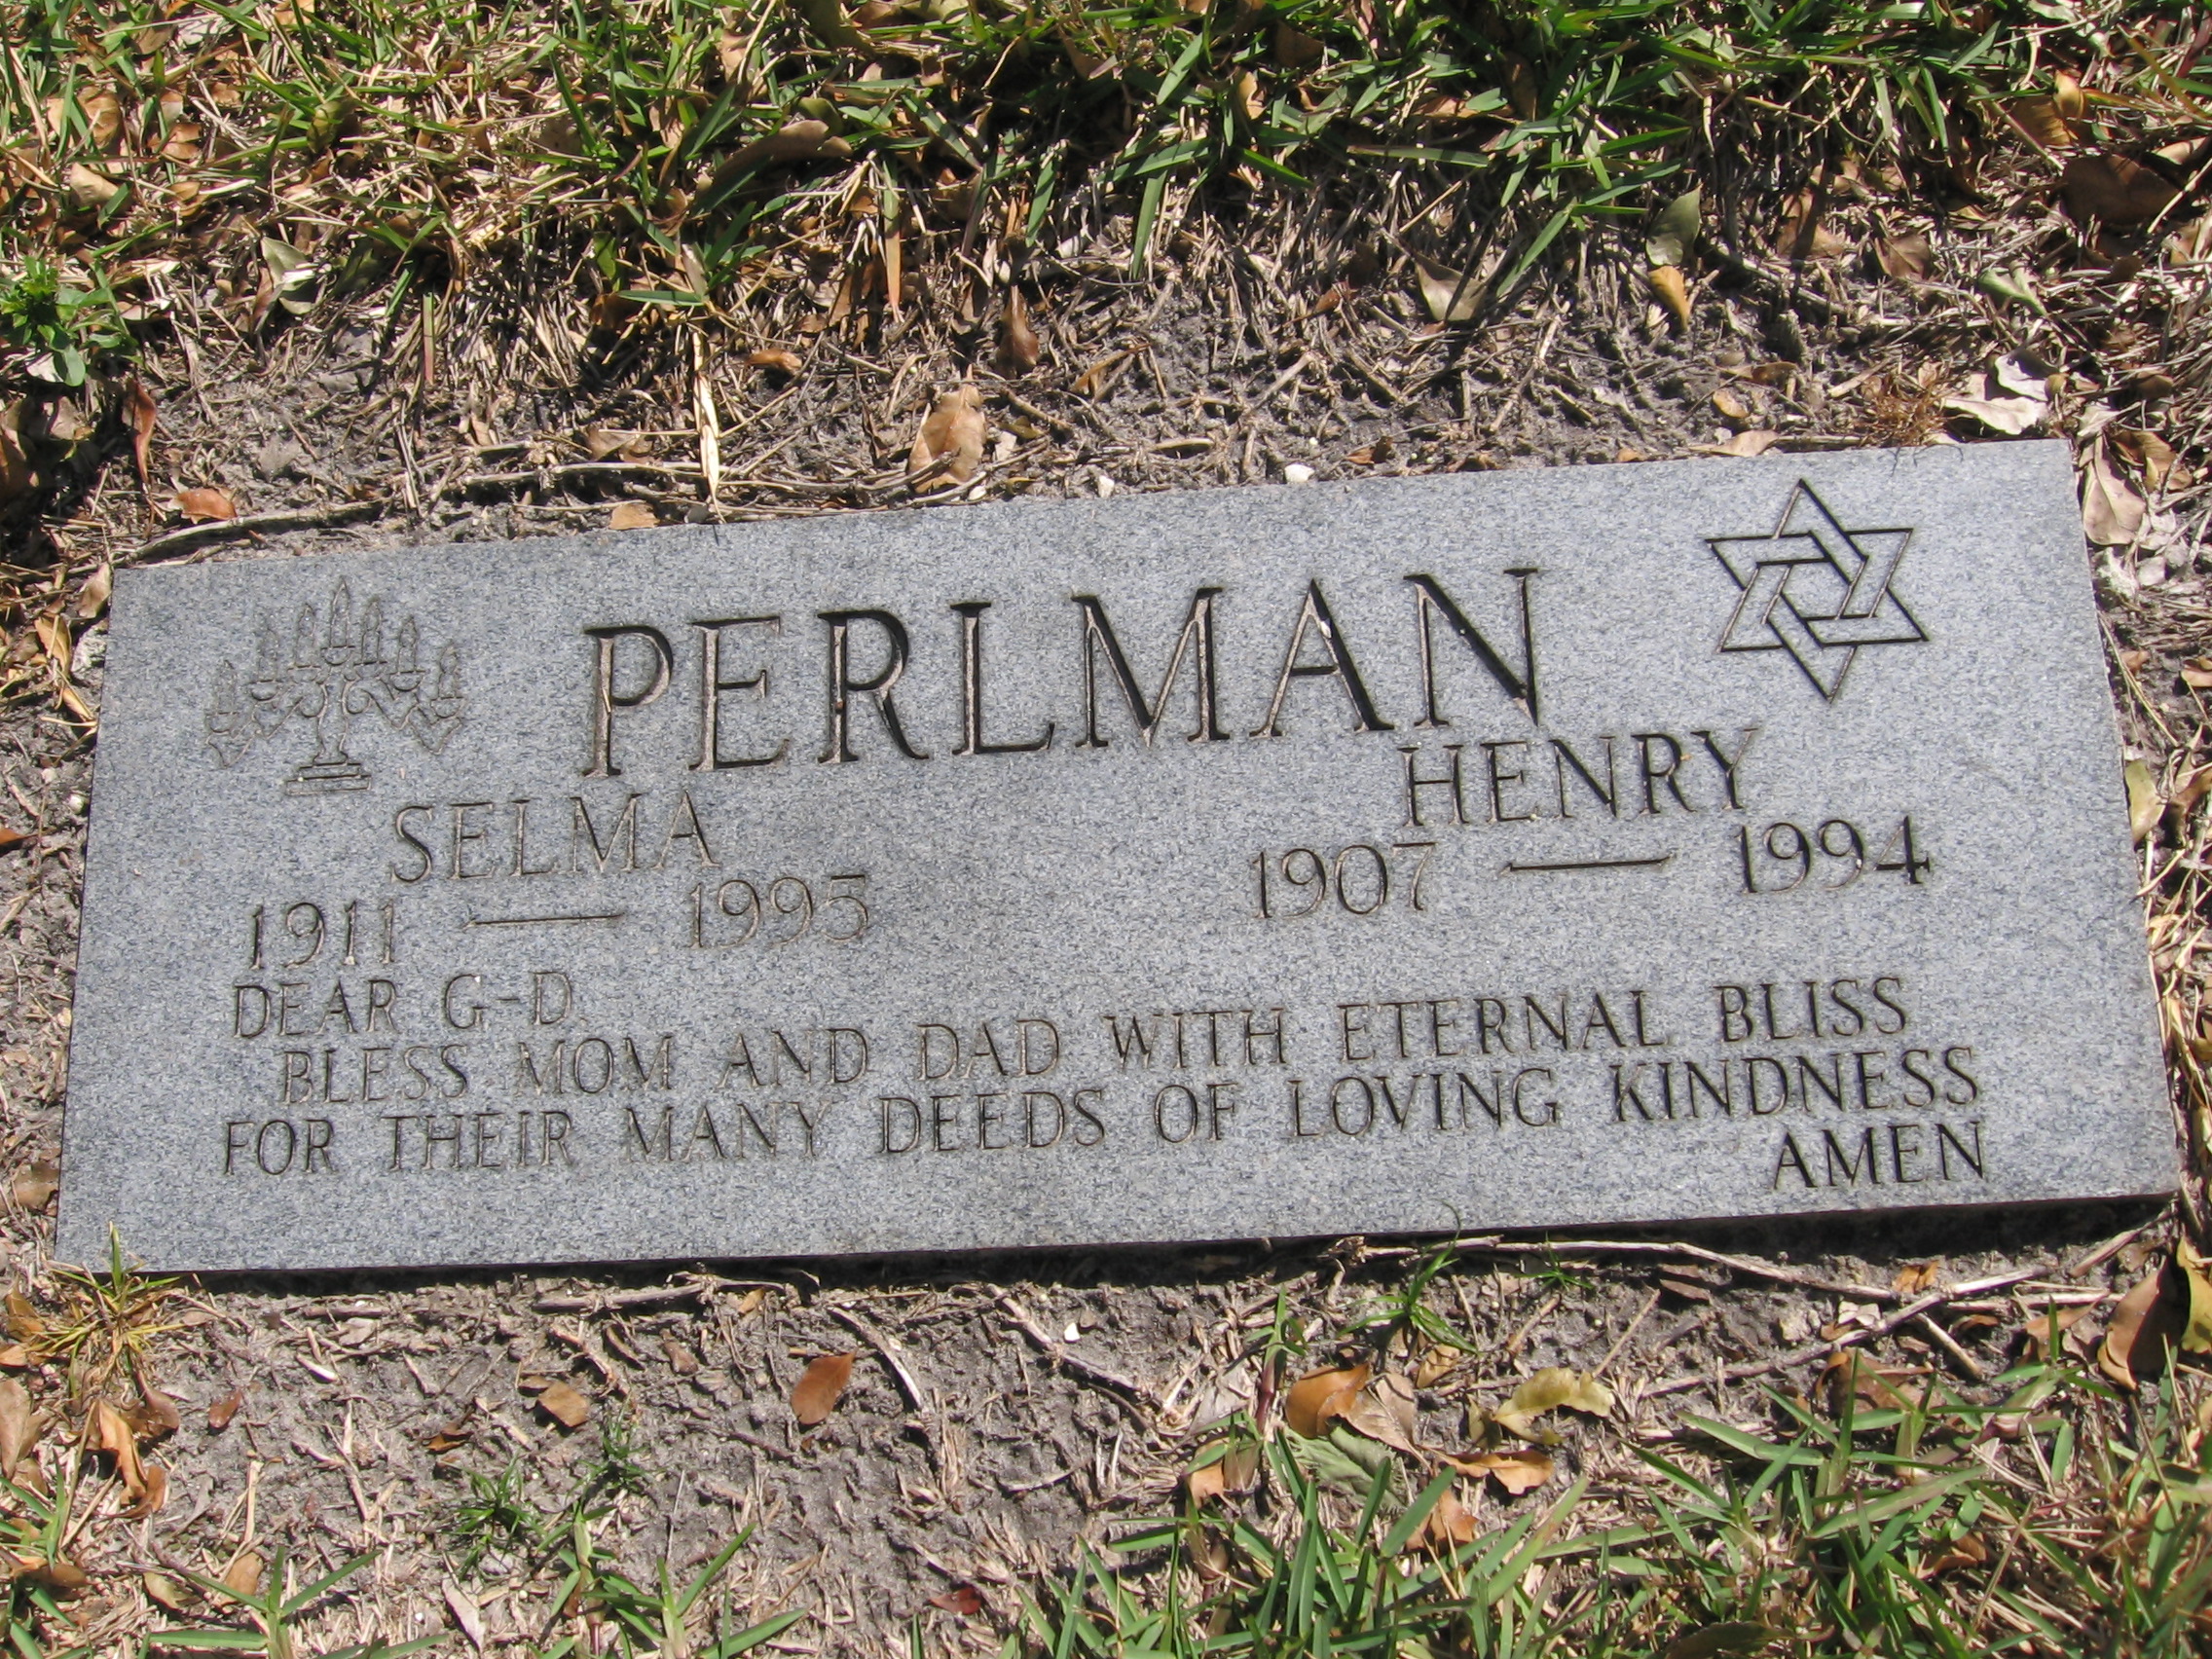 Henry Perlman